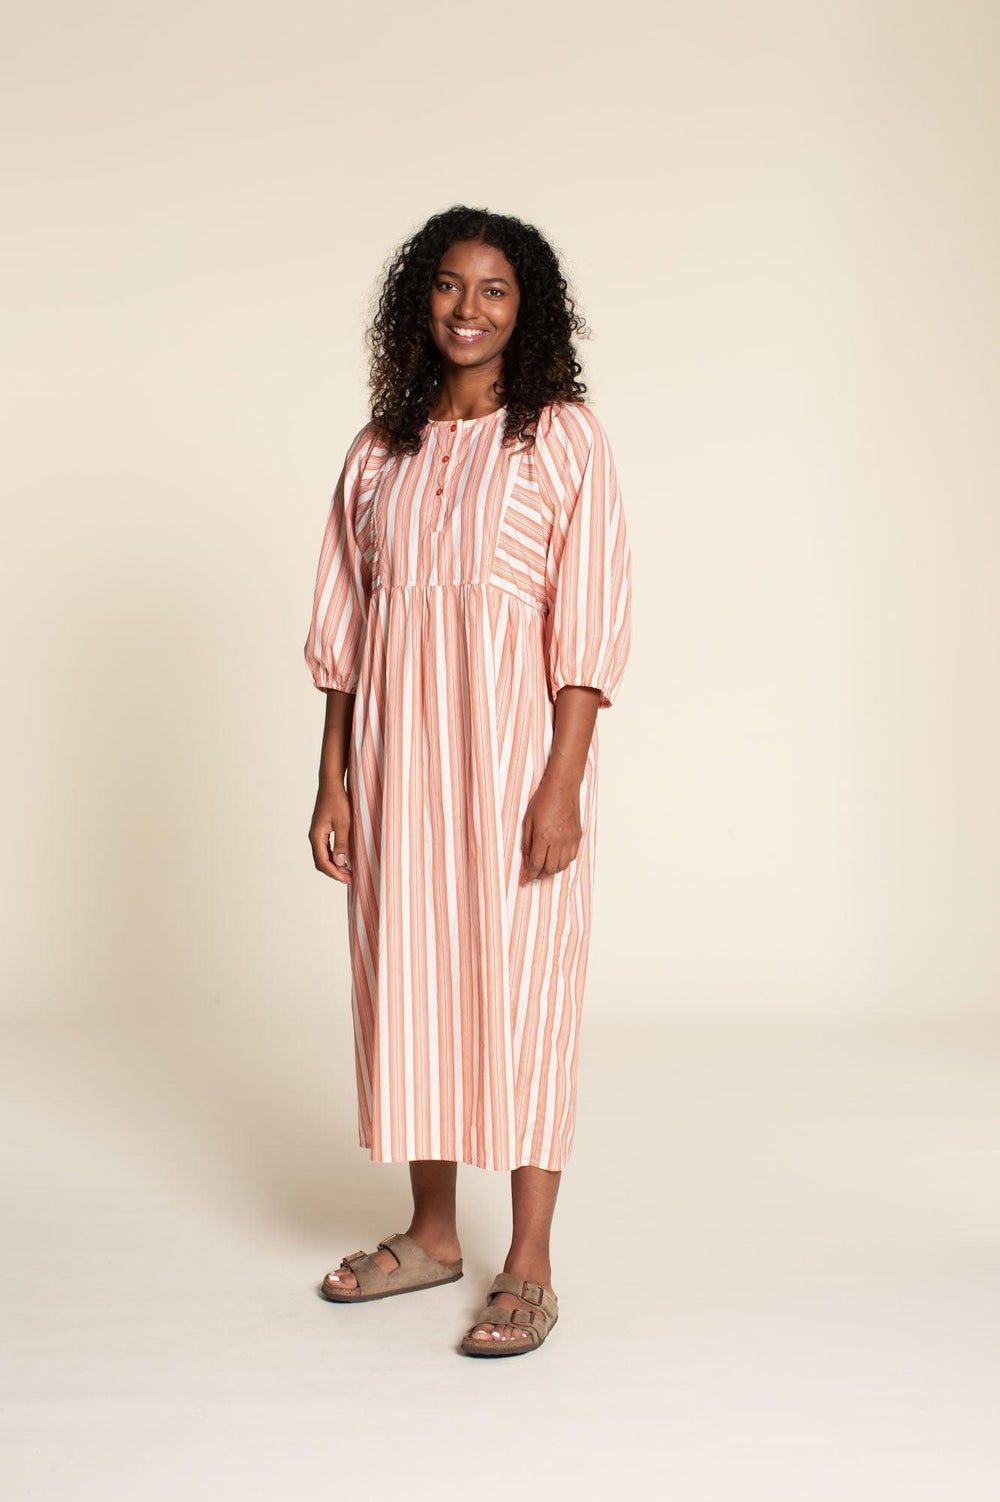 Balka Dress Sewing Pattern - Wardrobe By Me